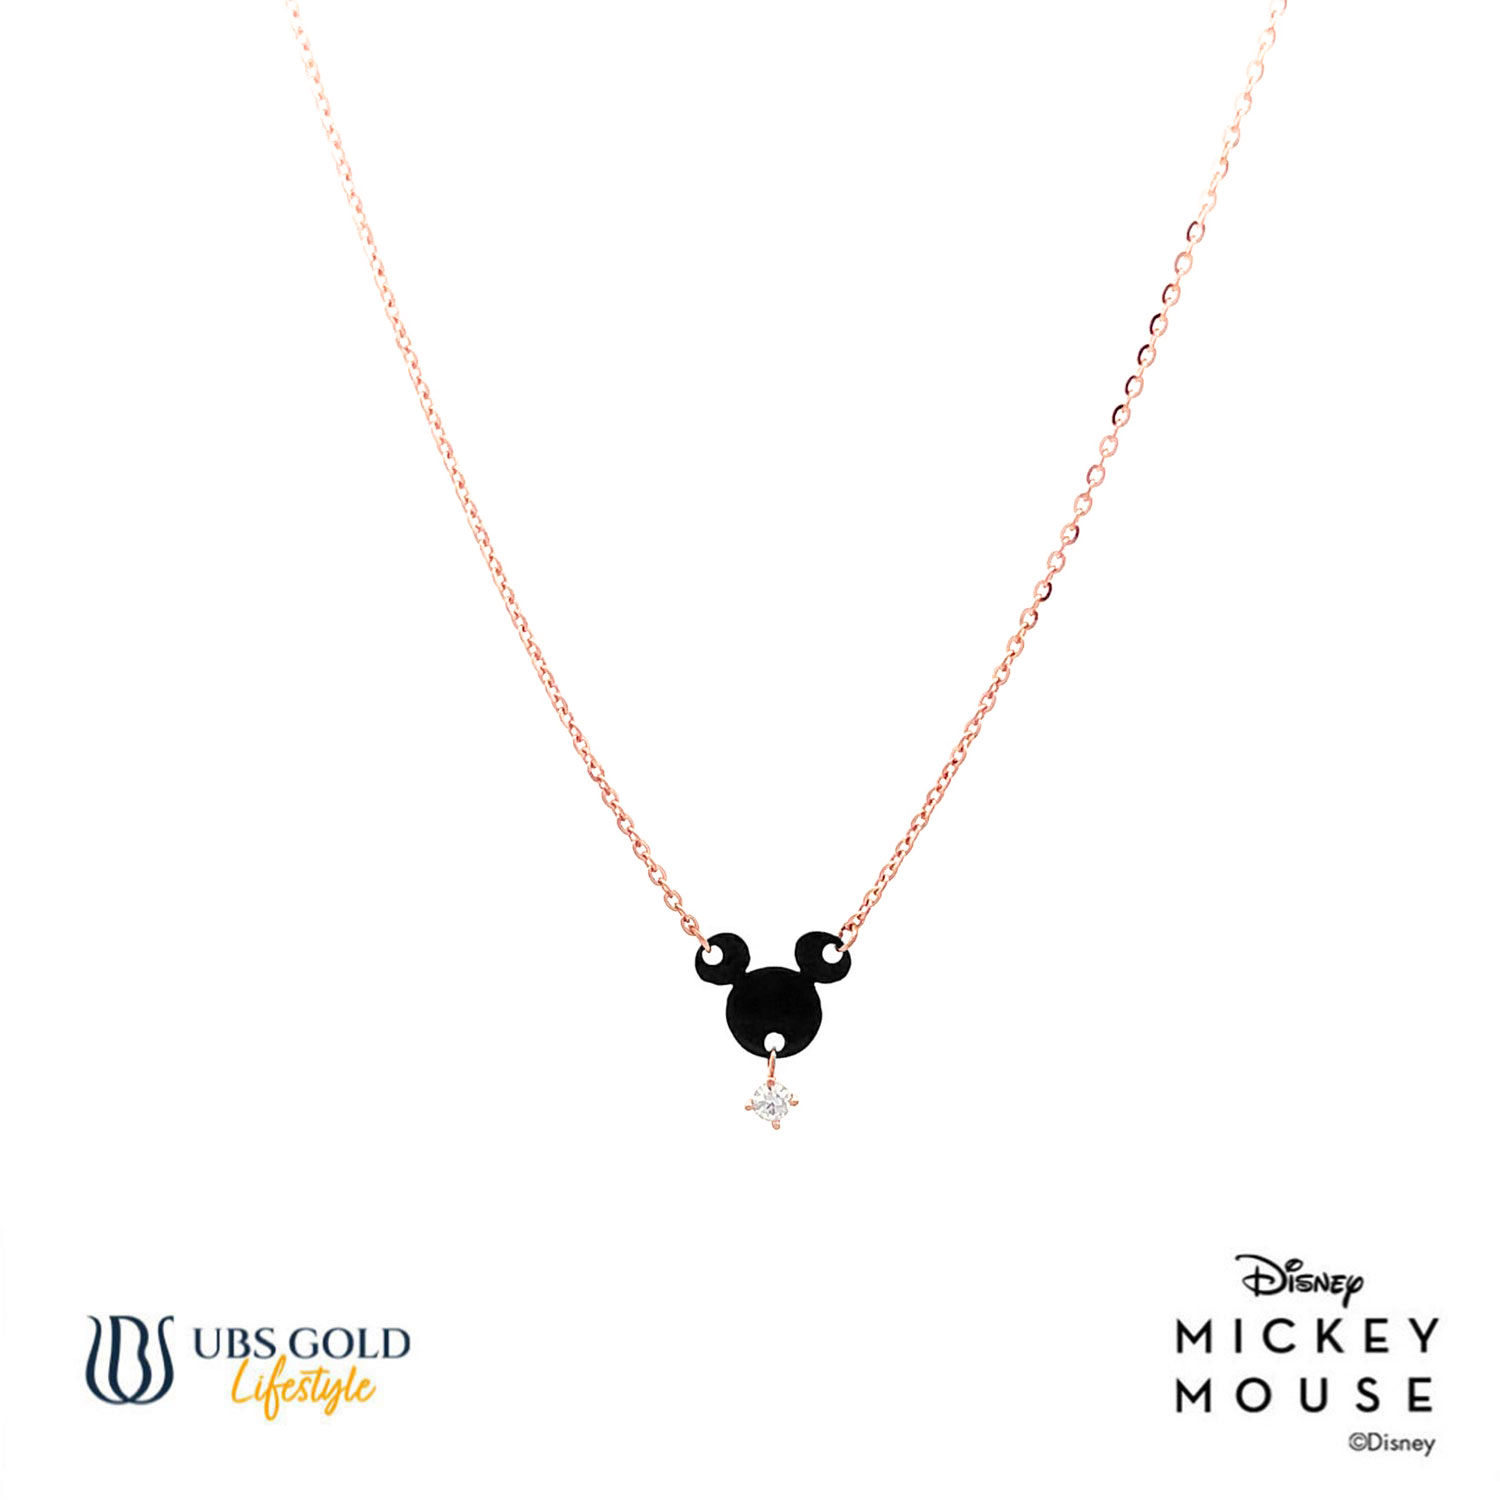 UBS Gold Kalung Emas Disney Mickey Mouse - Kky0478 - 17K